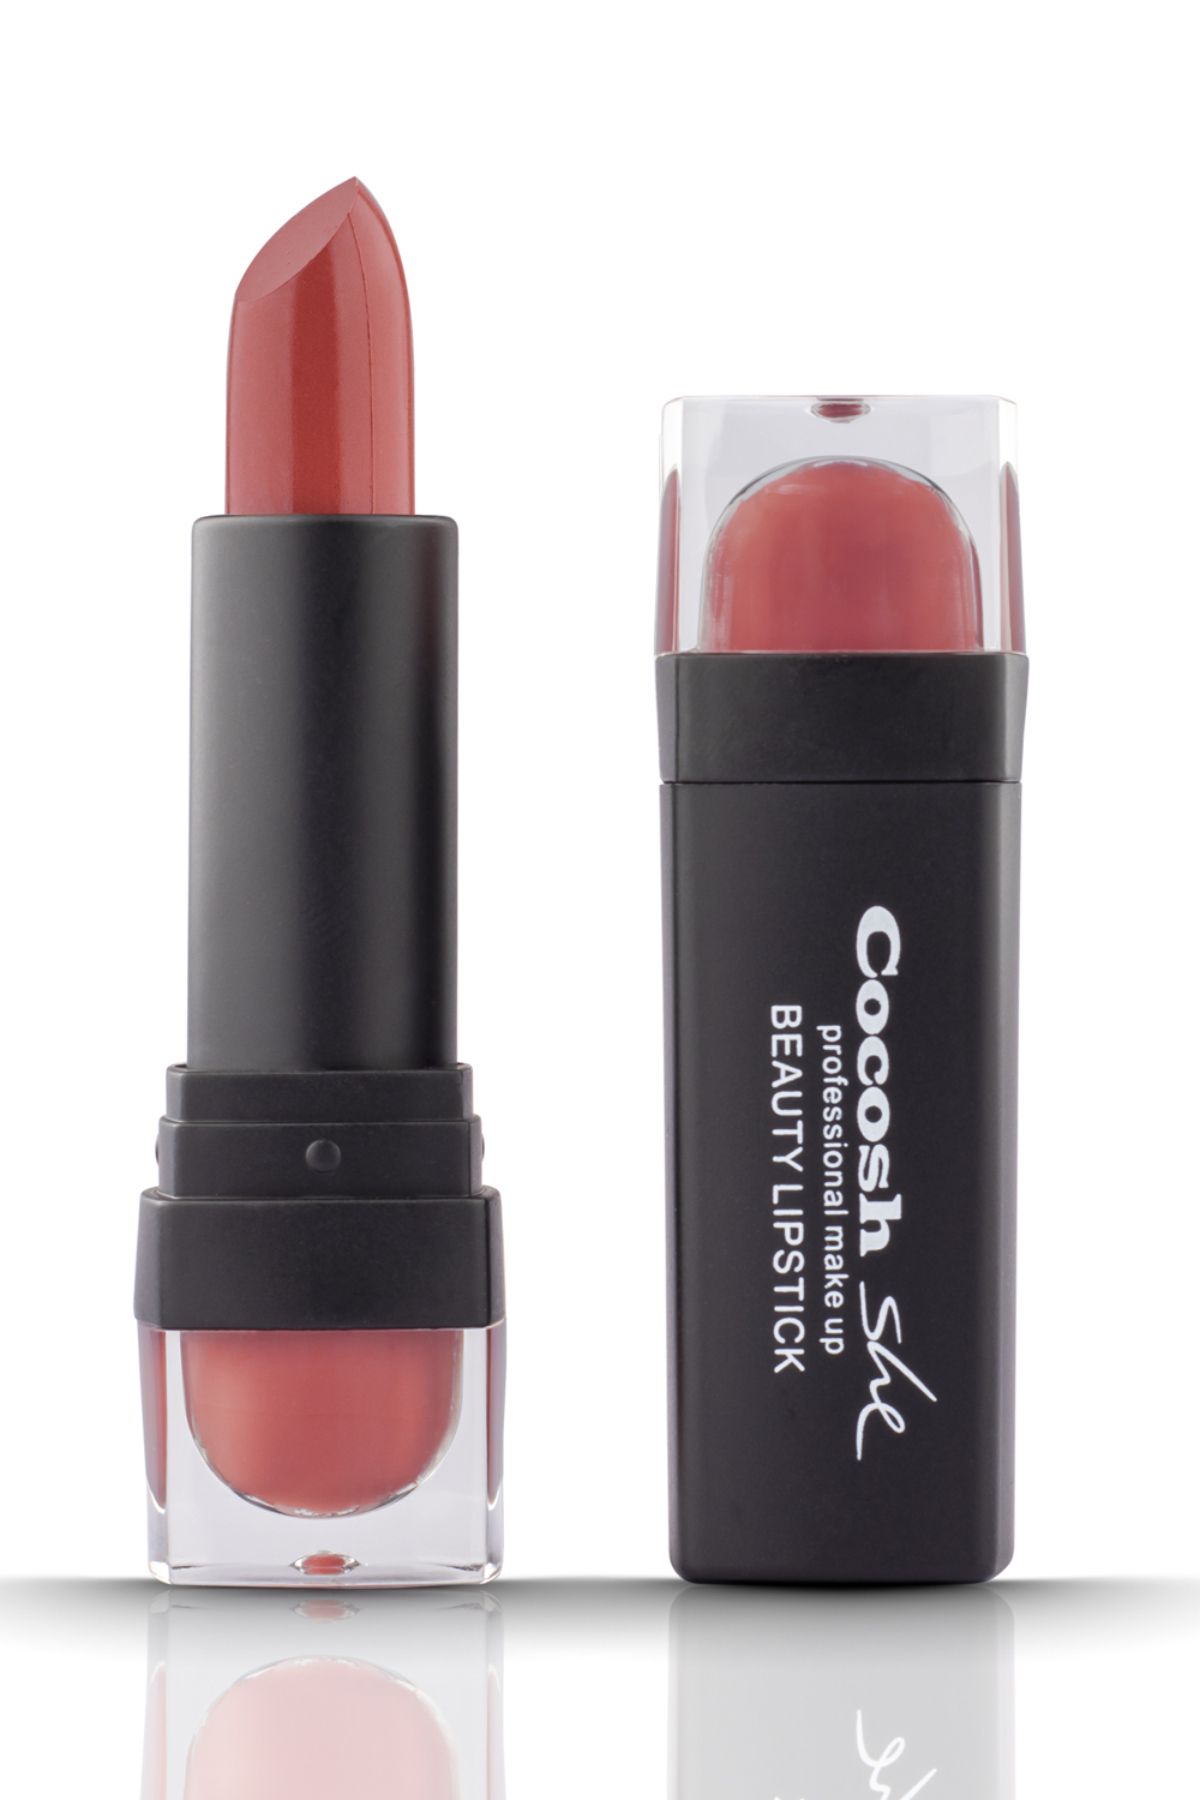 Cocosh She Beauty Lipstick Ruj 03 Rosebush, Kremsi Formül, Saten Görünüm, Orta-Tam Kapatıcılık